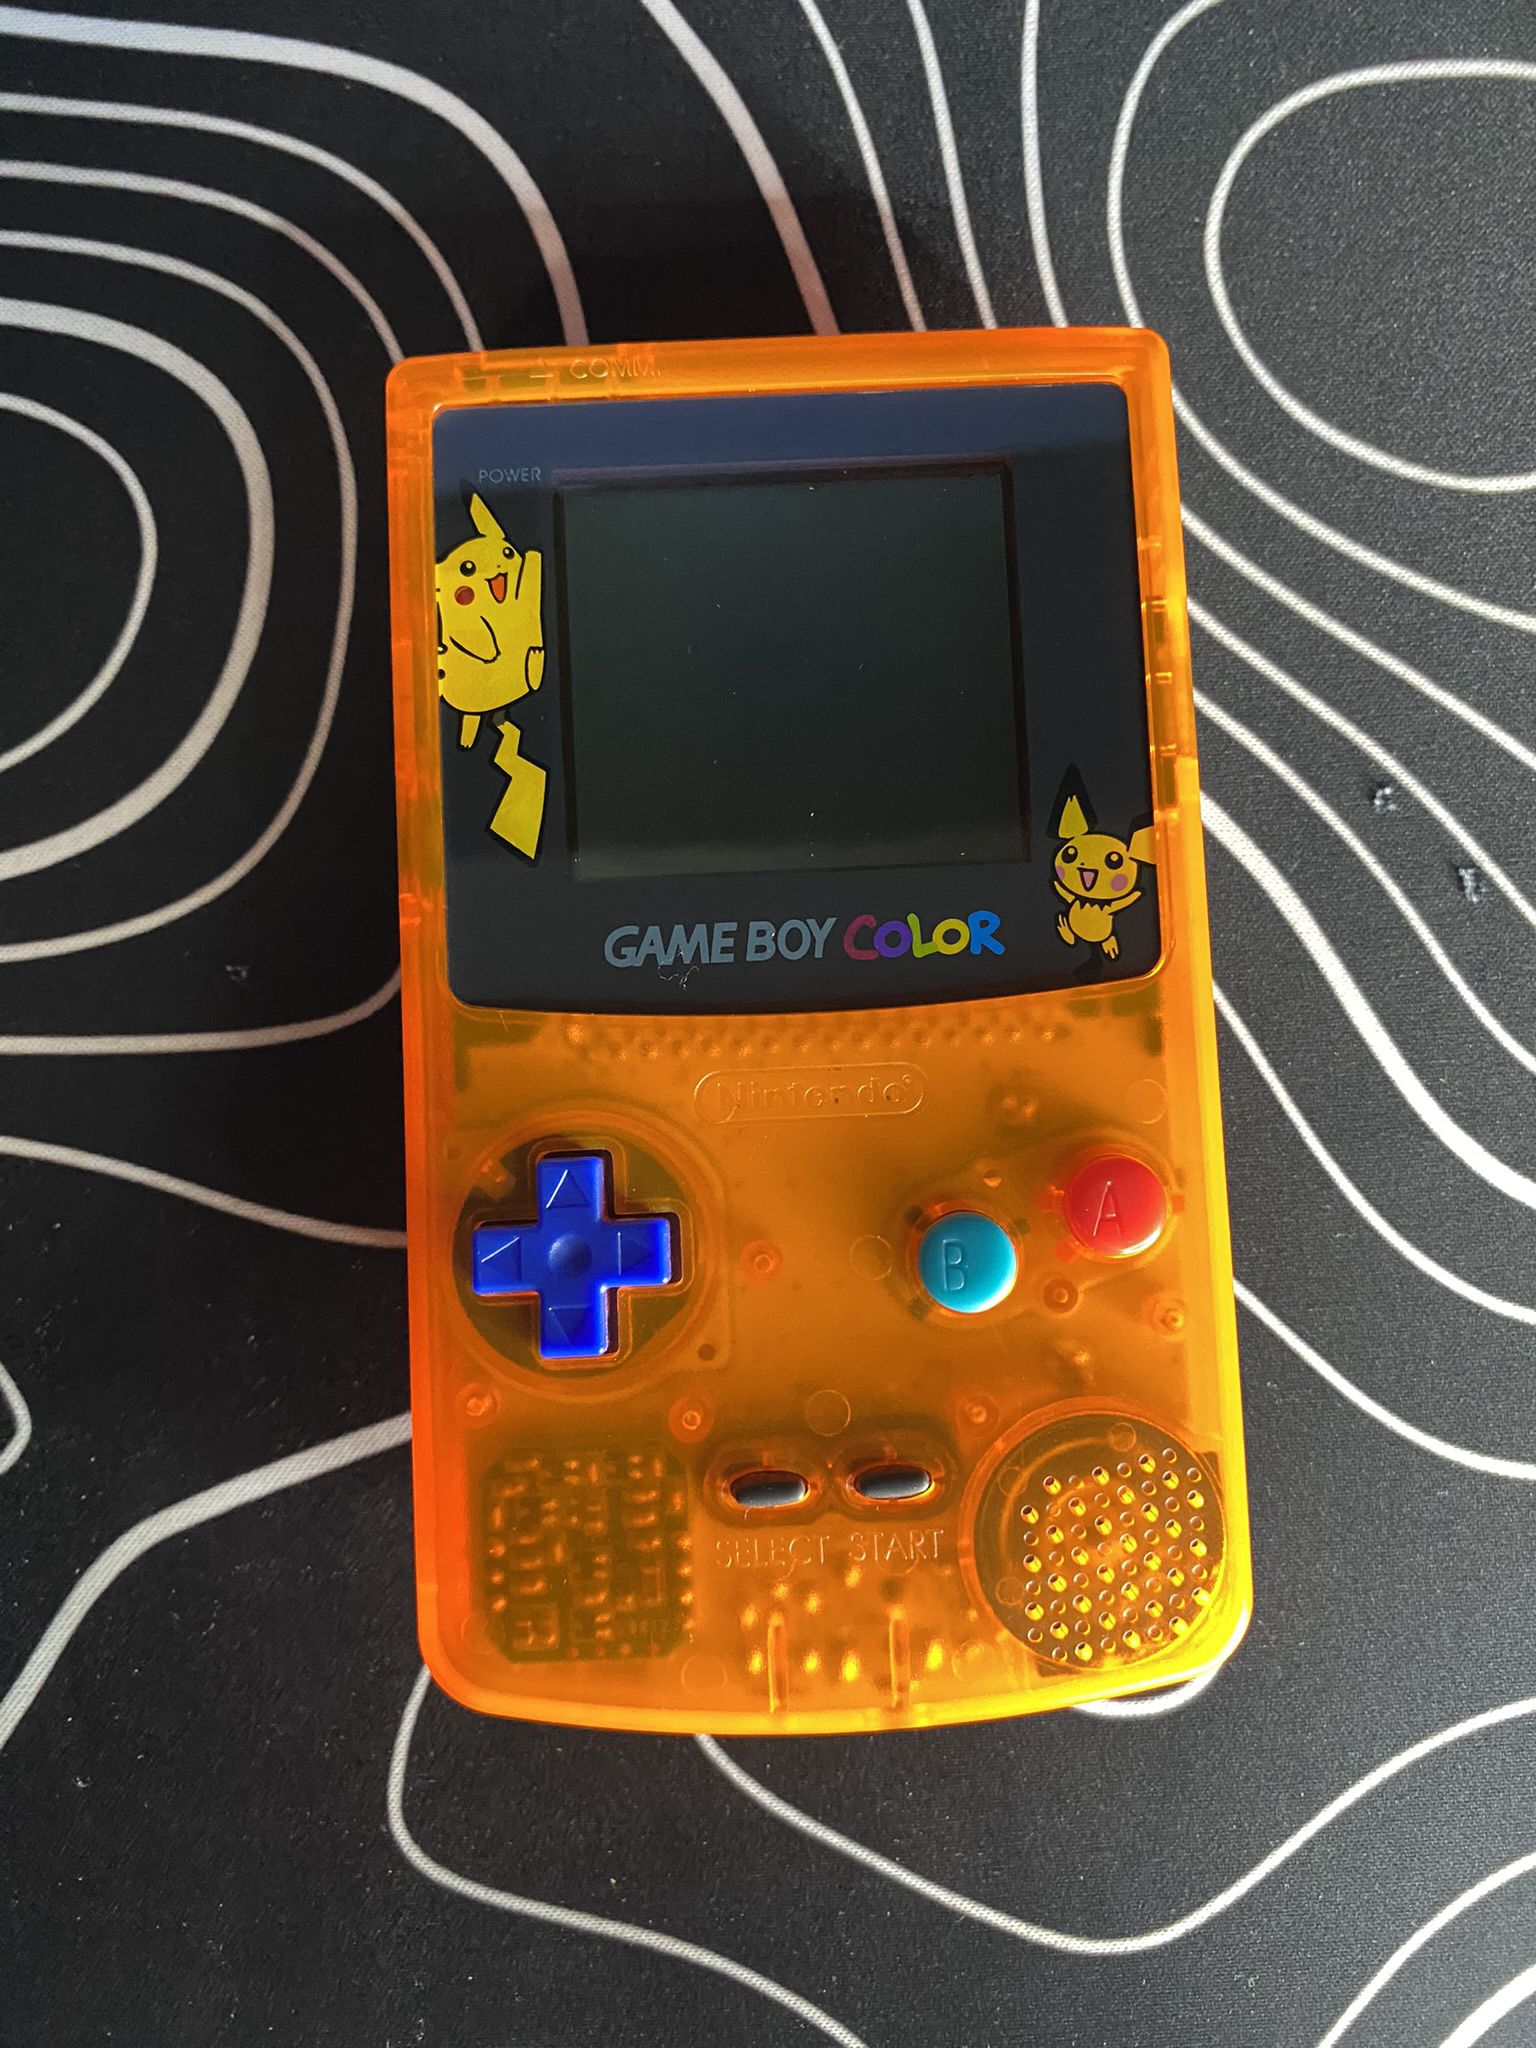 Gameboy Color Pokémon Special Pikachu Edition Nintendo System Console - Orange 